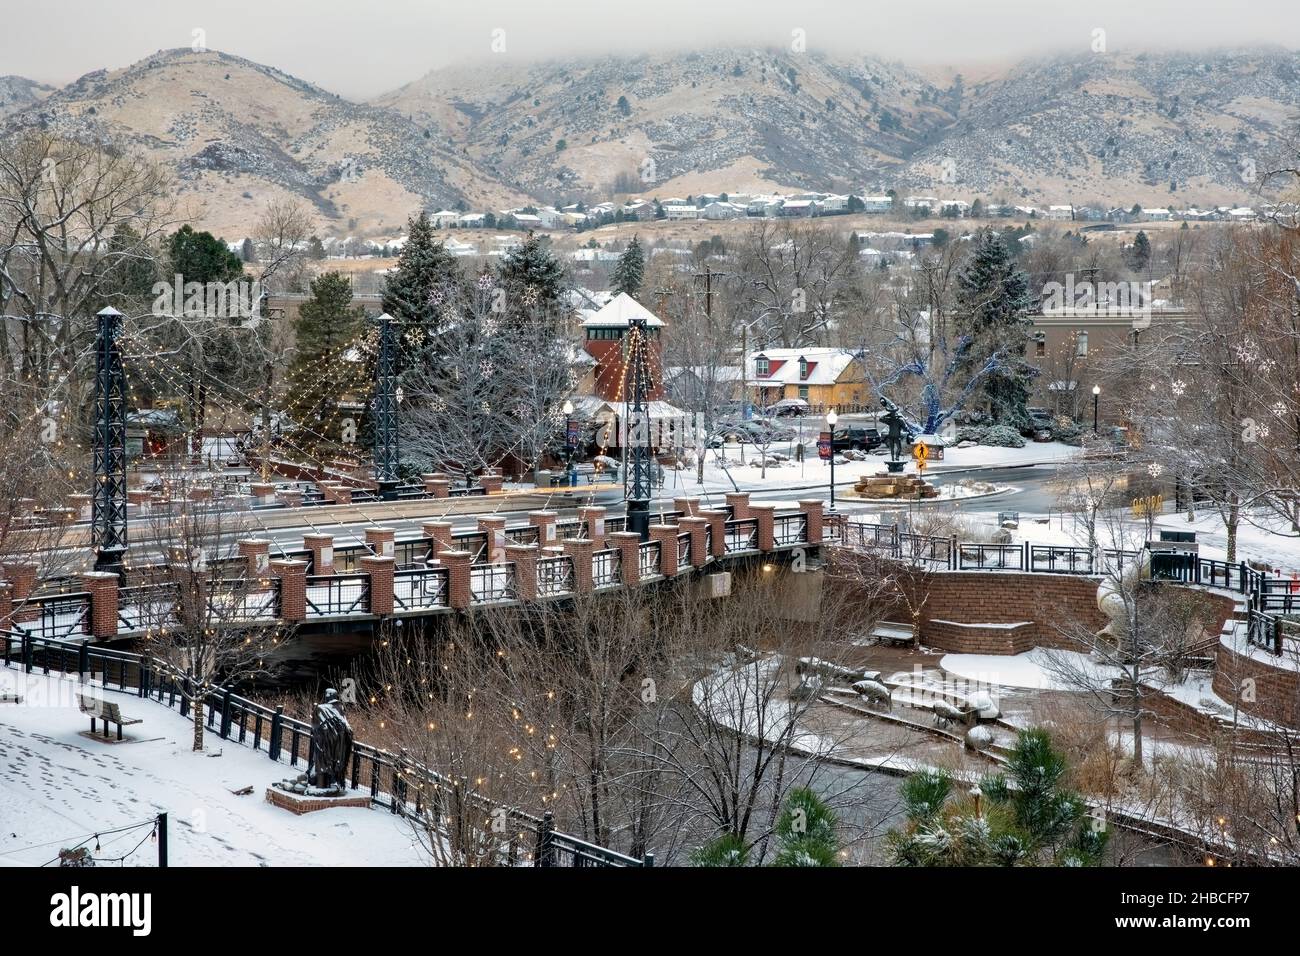 A winter wonderland landscape - Washington Avenue Bridge over Clear Creek in Golden, Colorado, USA Stock Photo